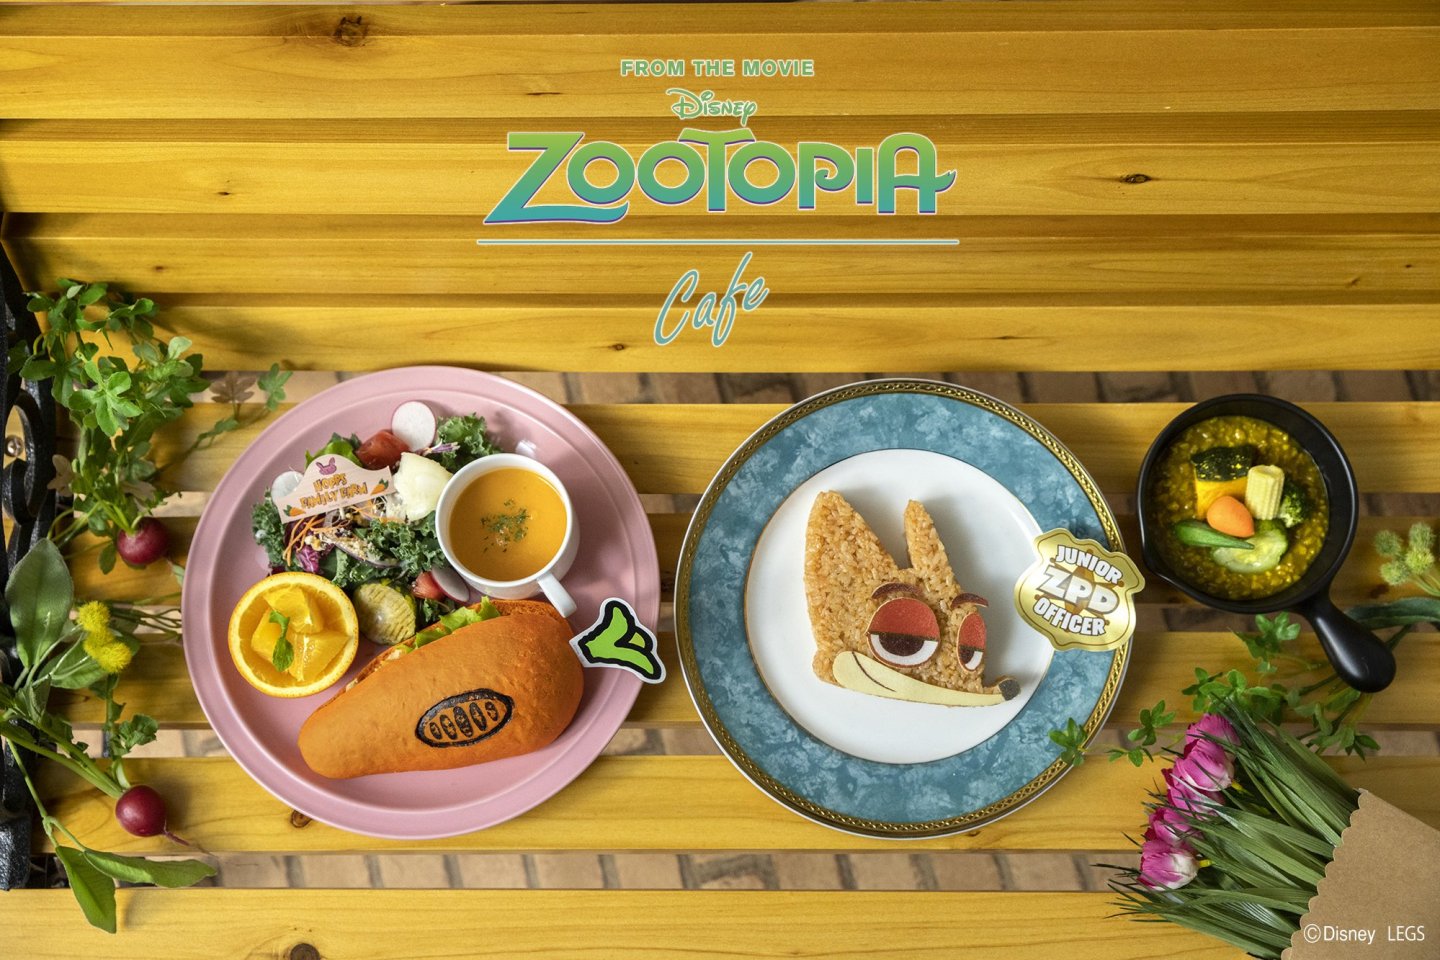 The event celebrates the 5th anniversary of Zootopia\'s release